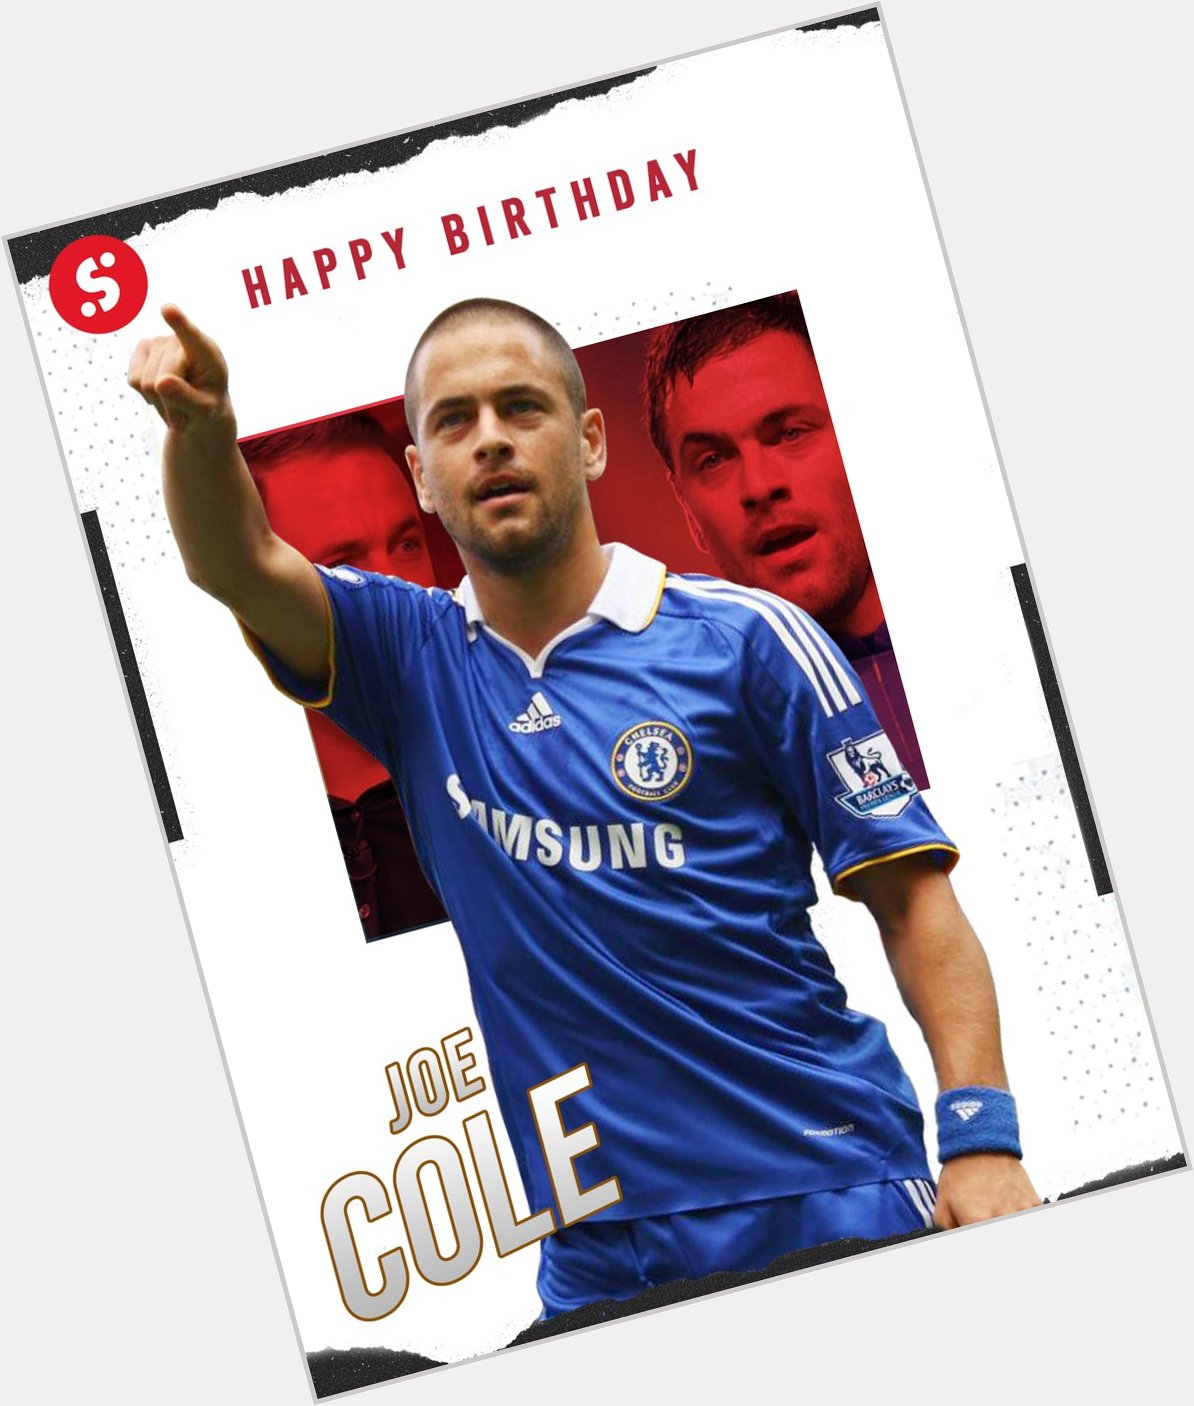 Happy birthday to former Chelsea forward Joe Cole, who turns 4  1  today!           